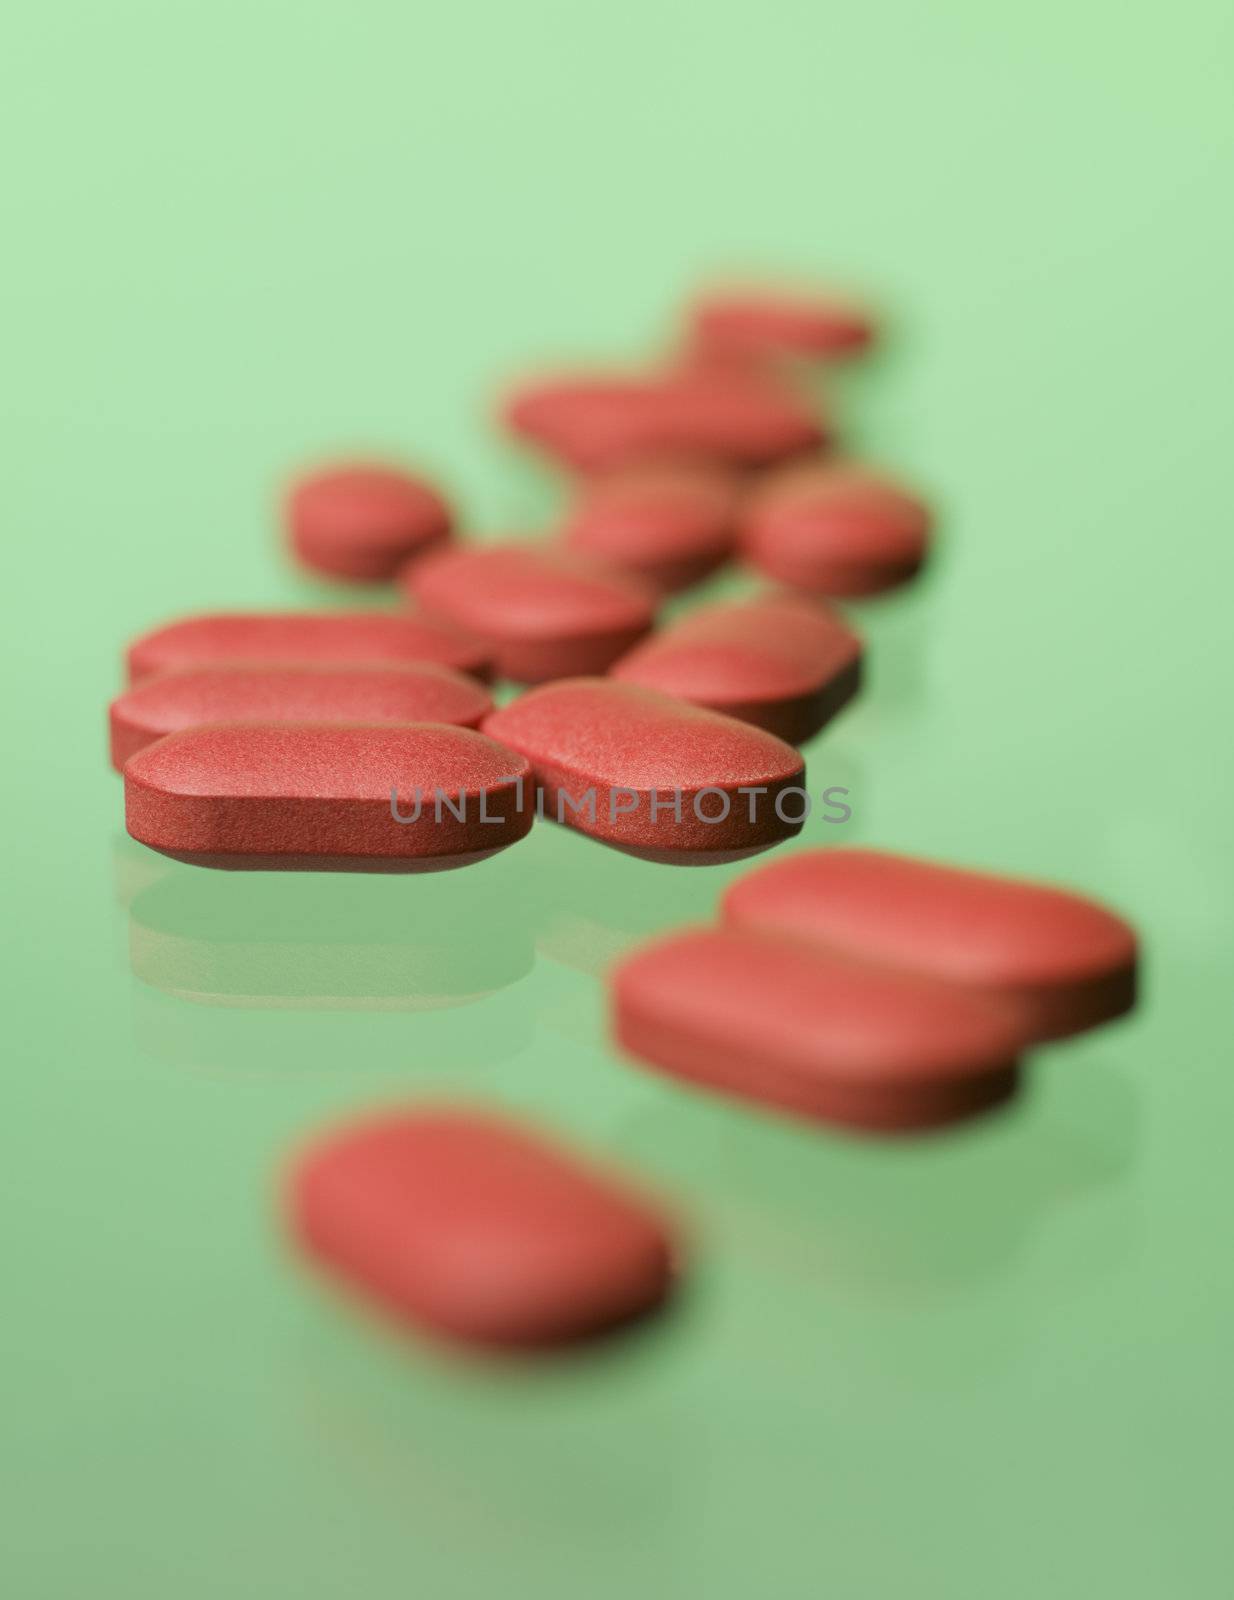 Red pills toward green background by gemenacom